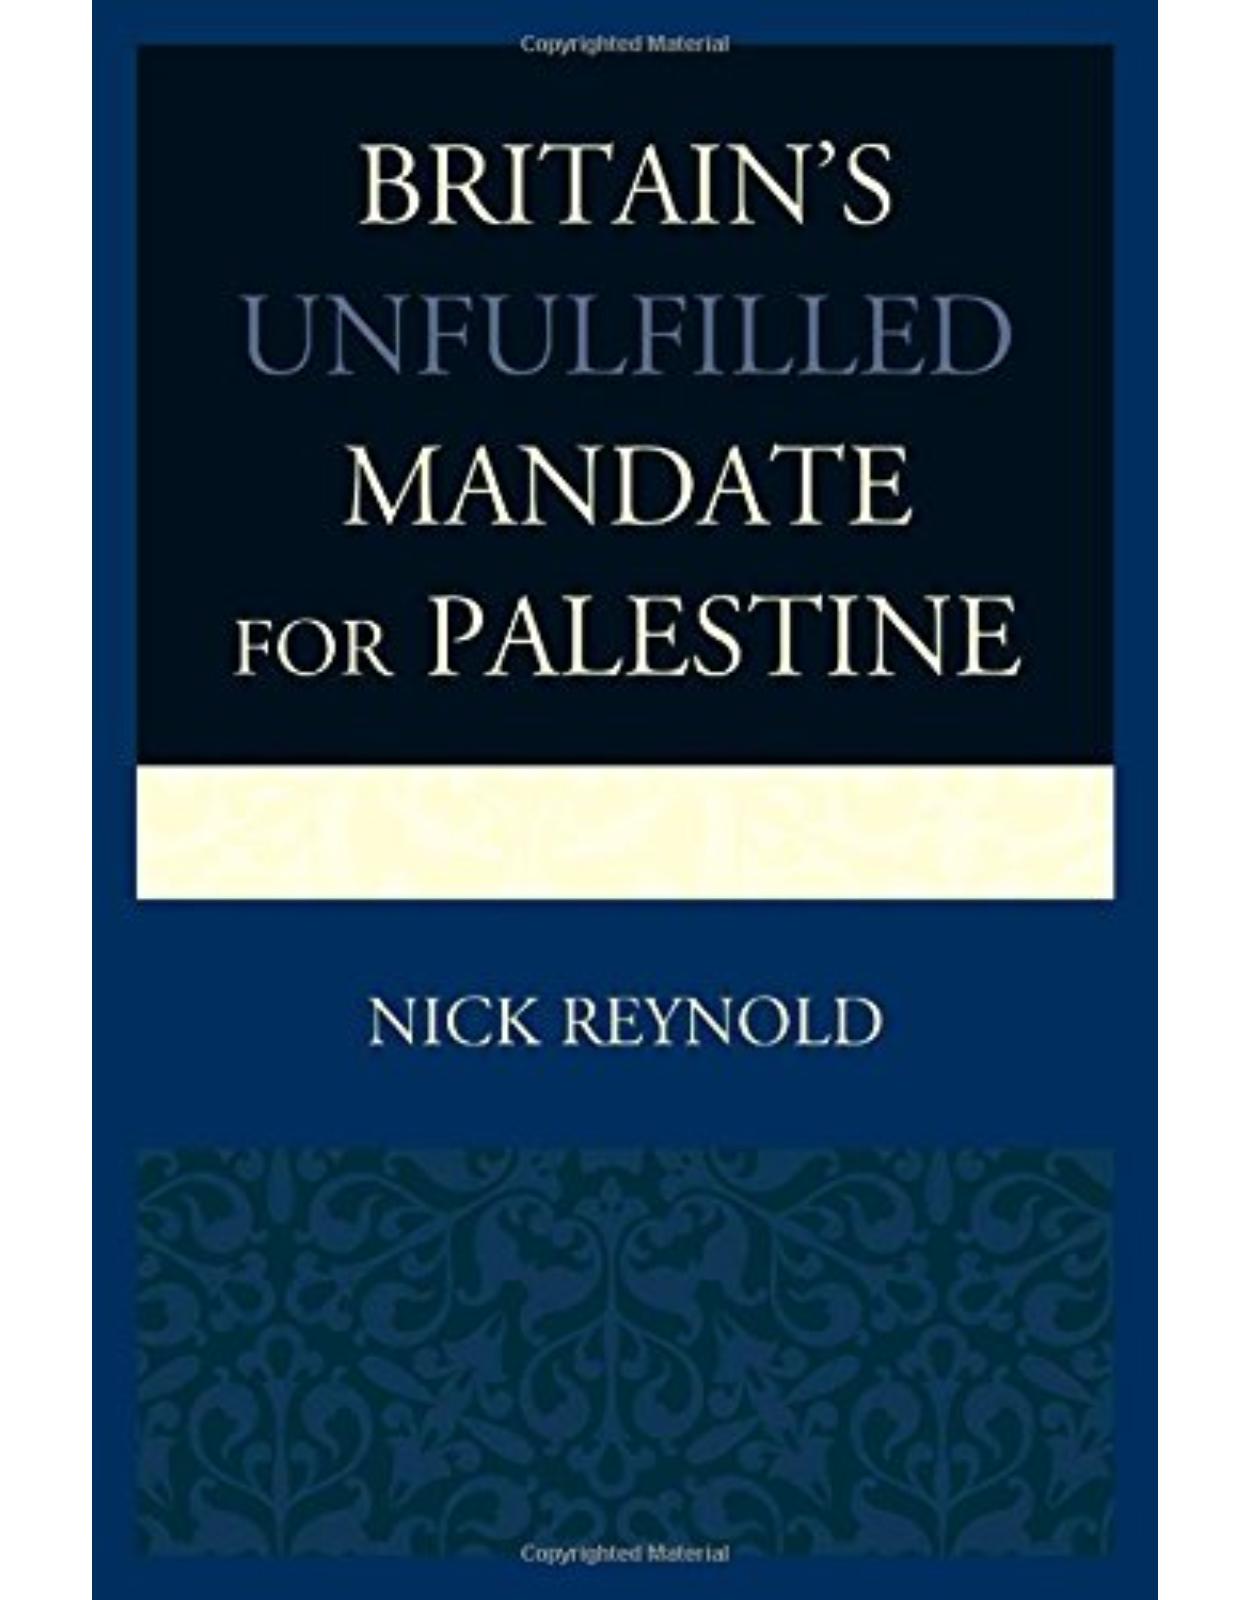 BritainÂ’s Unfulfilled Mandate for Palestine